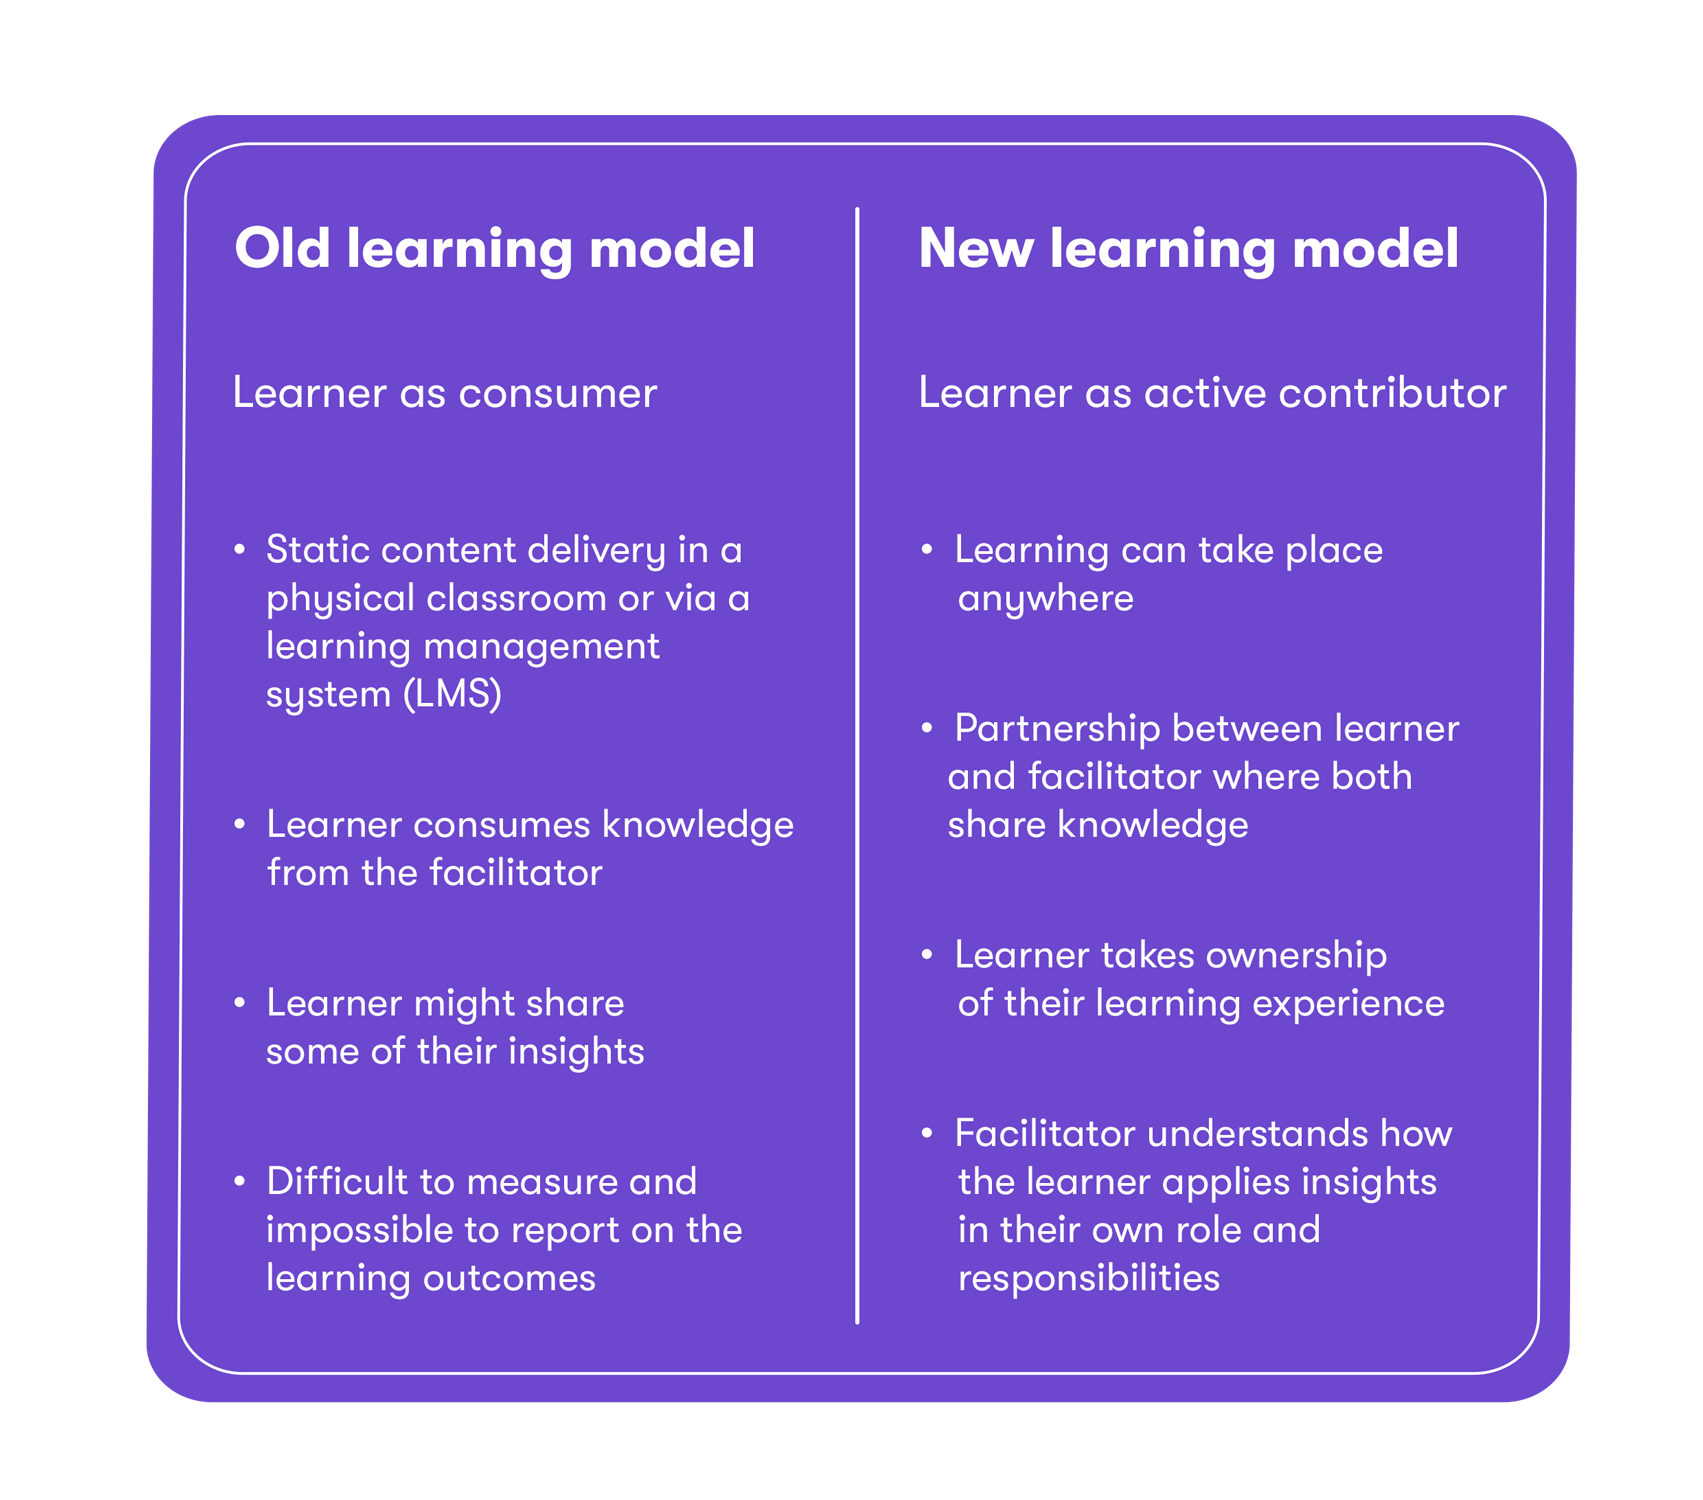 Old learning model vs. new learning model